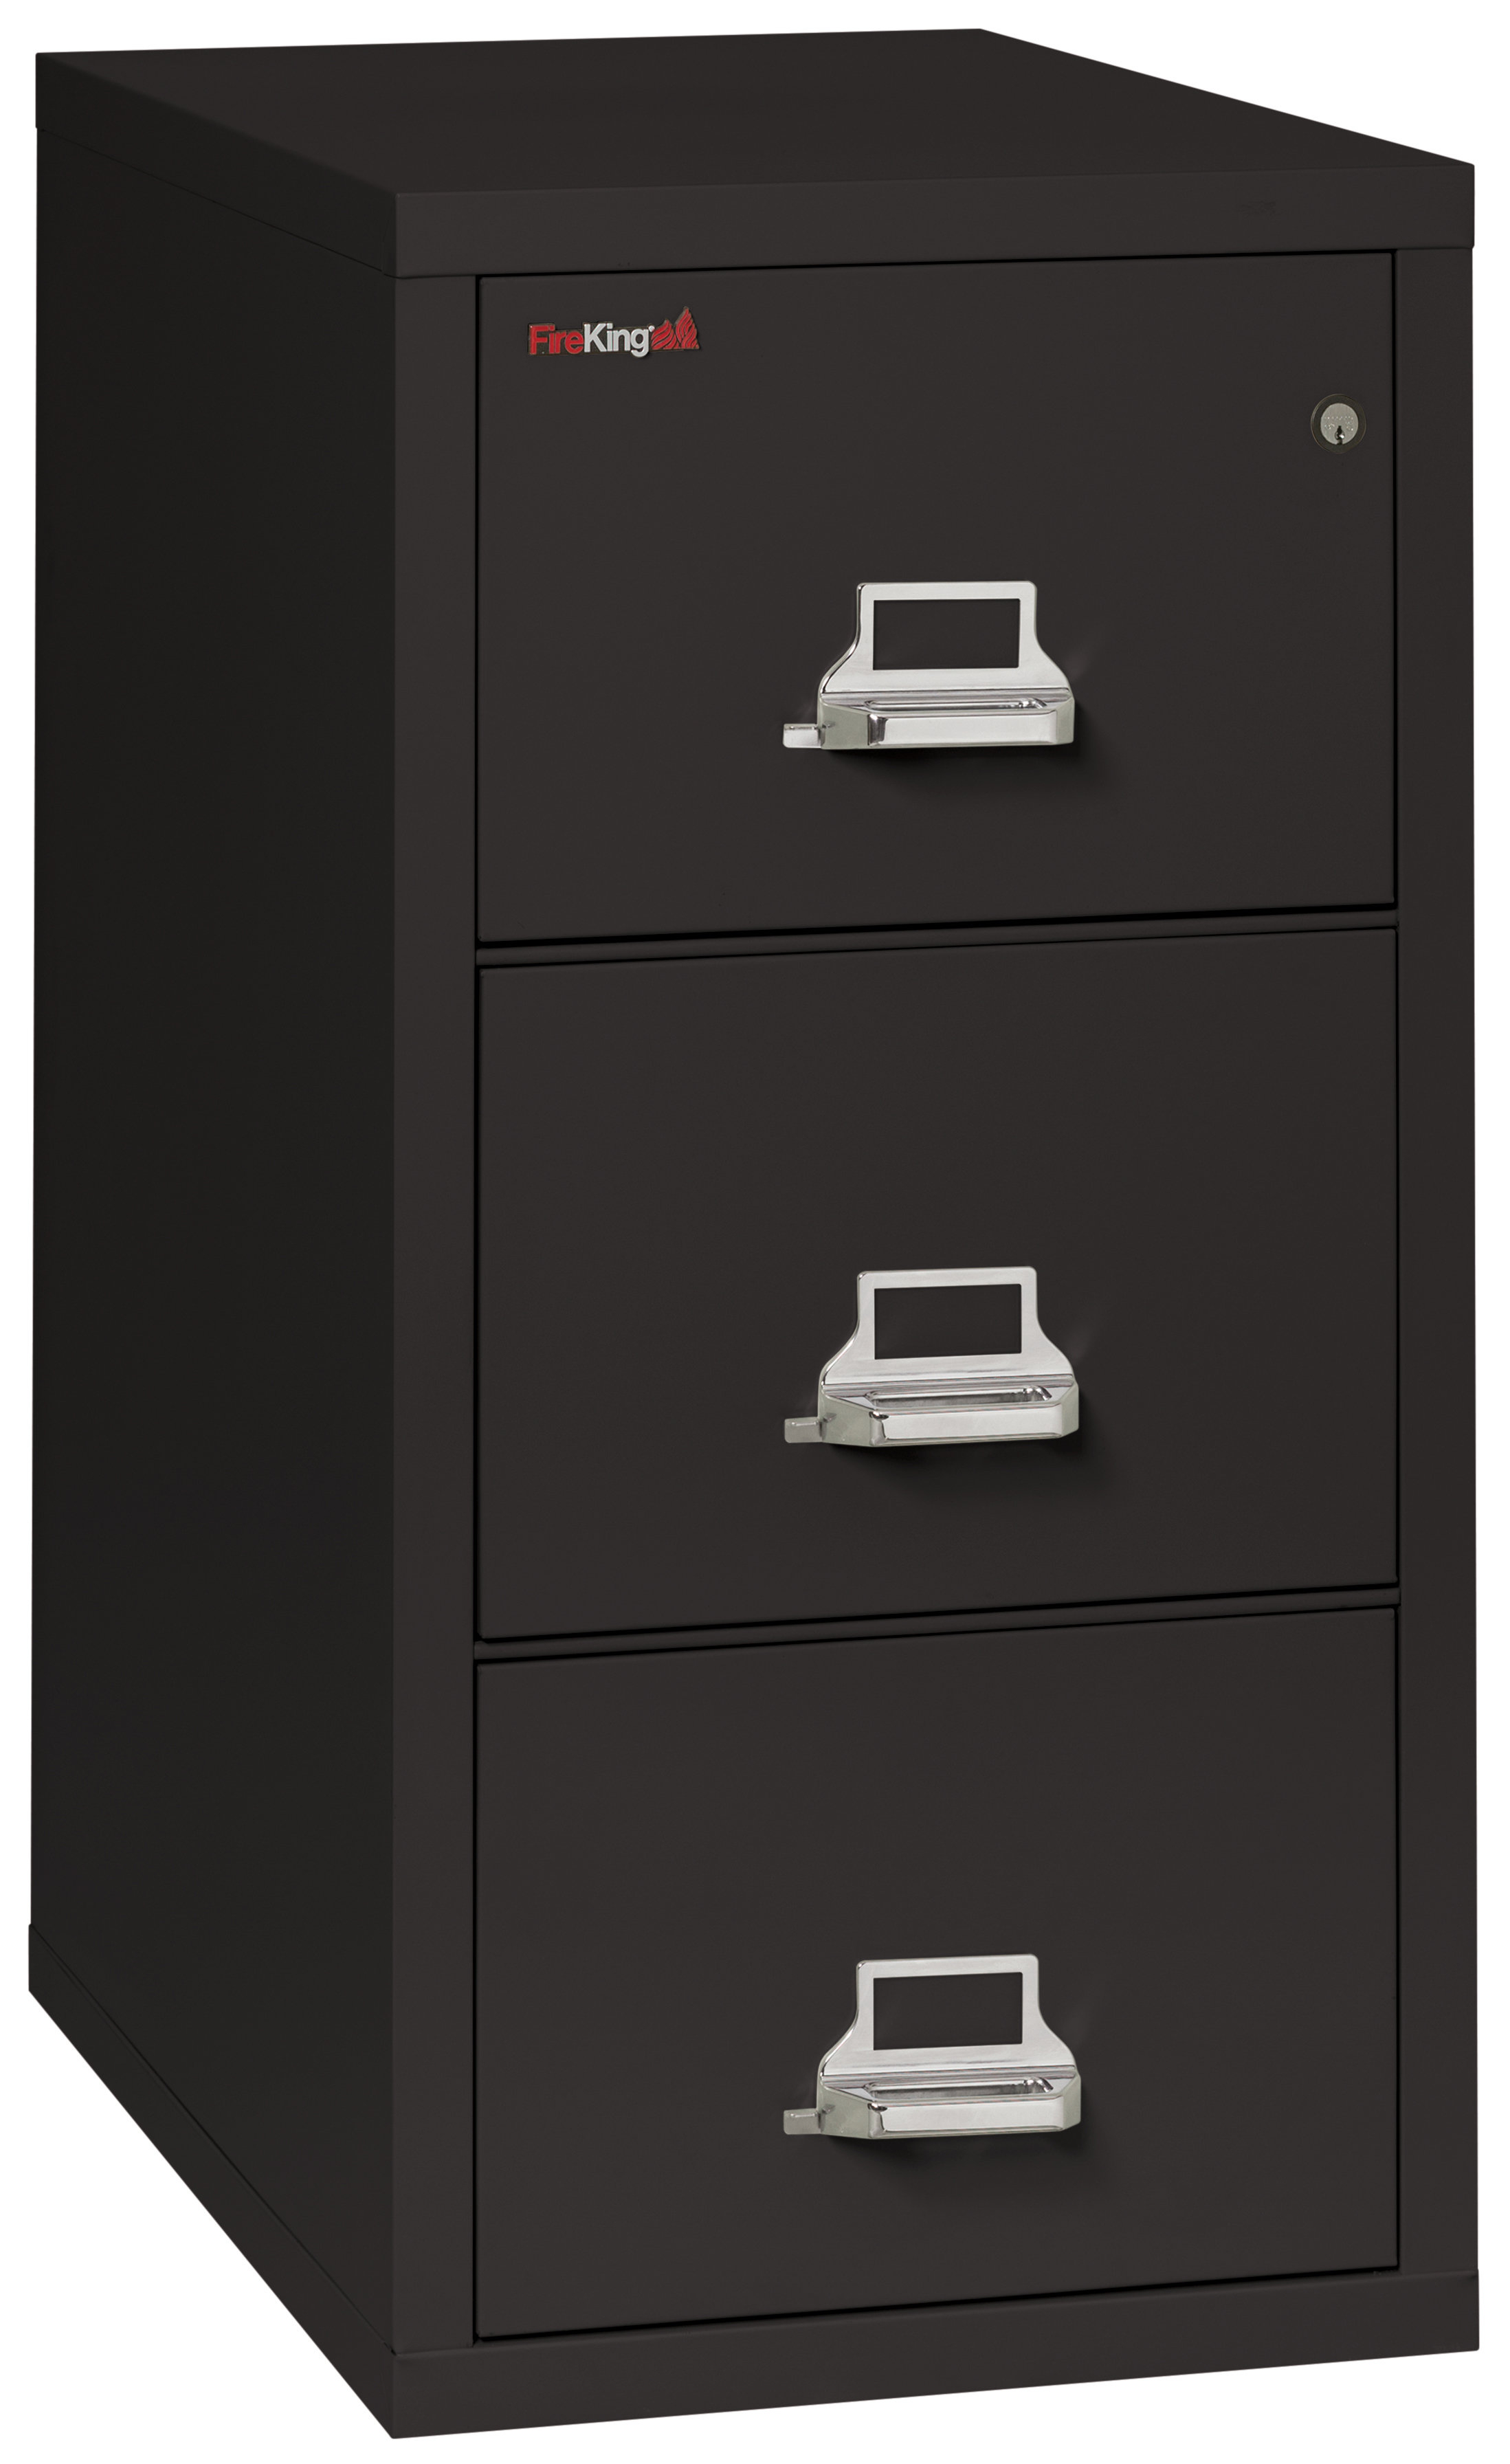 Fireproof 3 Drawer Vertical File Cabinet regarding dimensions 2197 X 3585